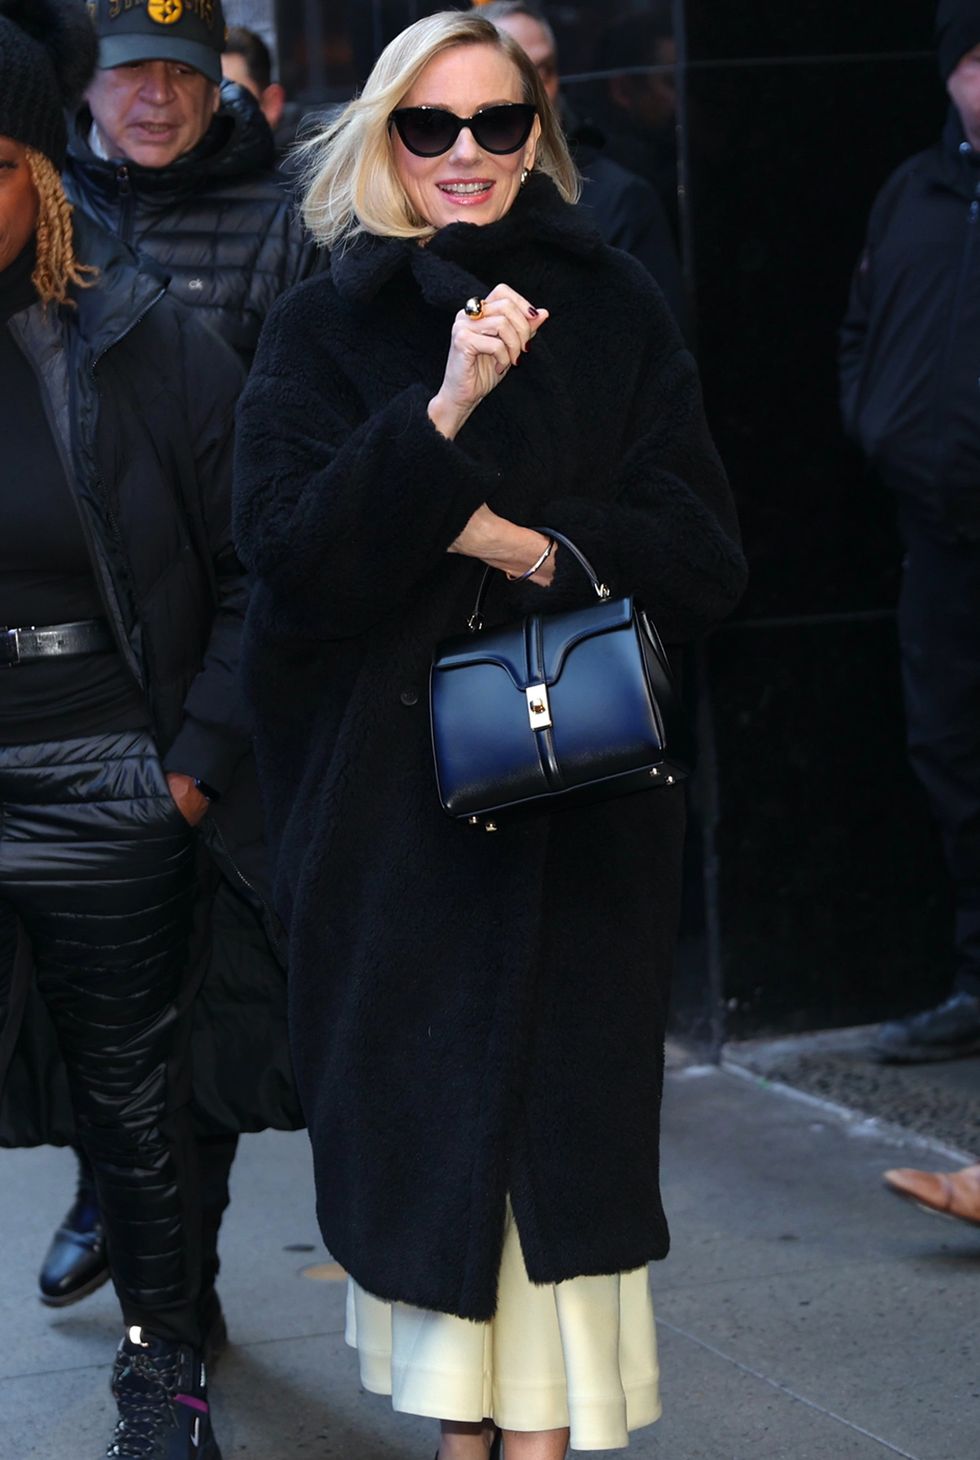 Naomi Watts' effortlessly chic Feud Capote wardrobe